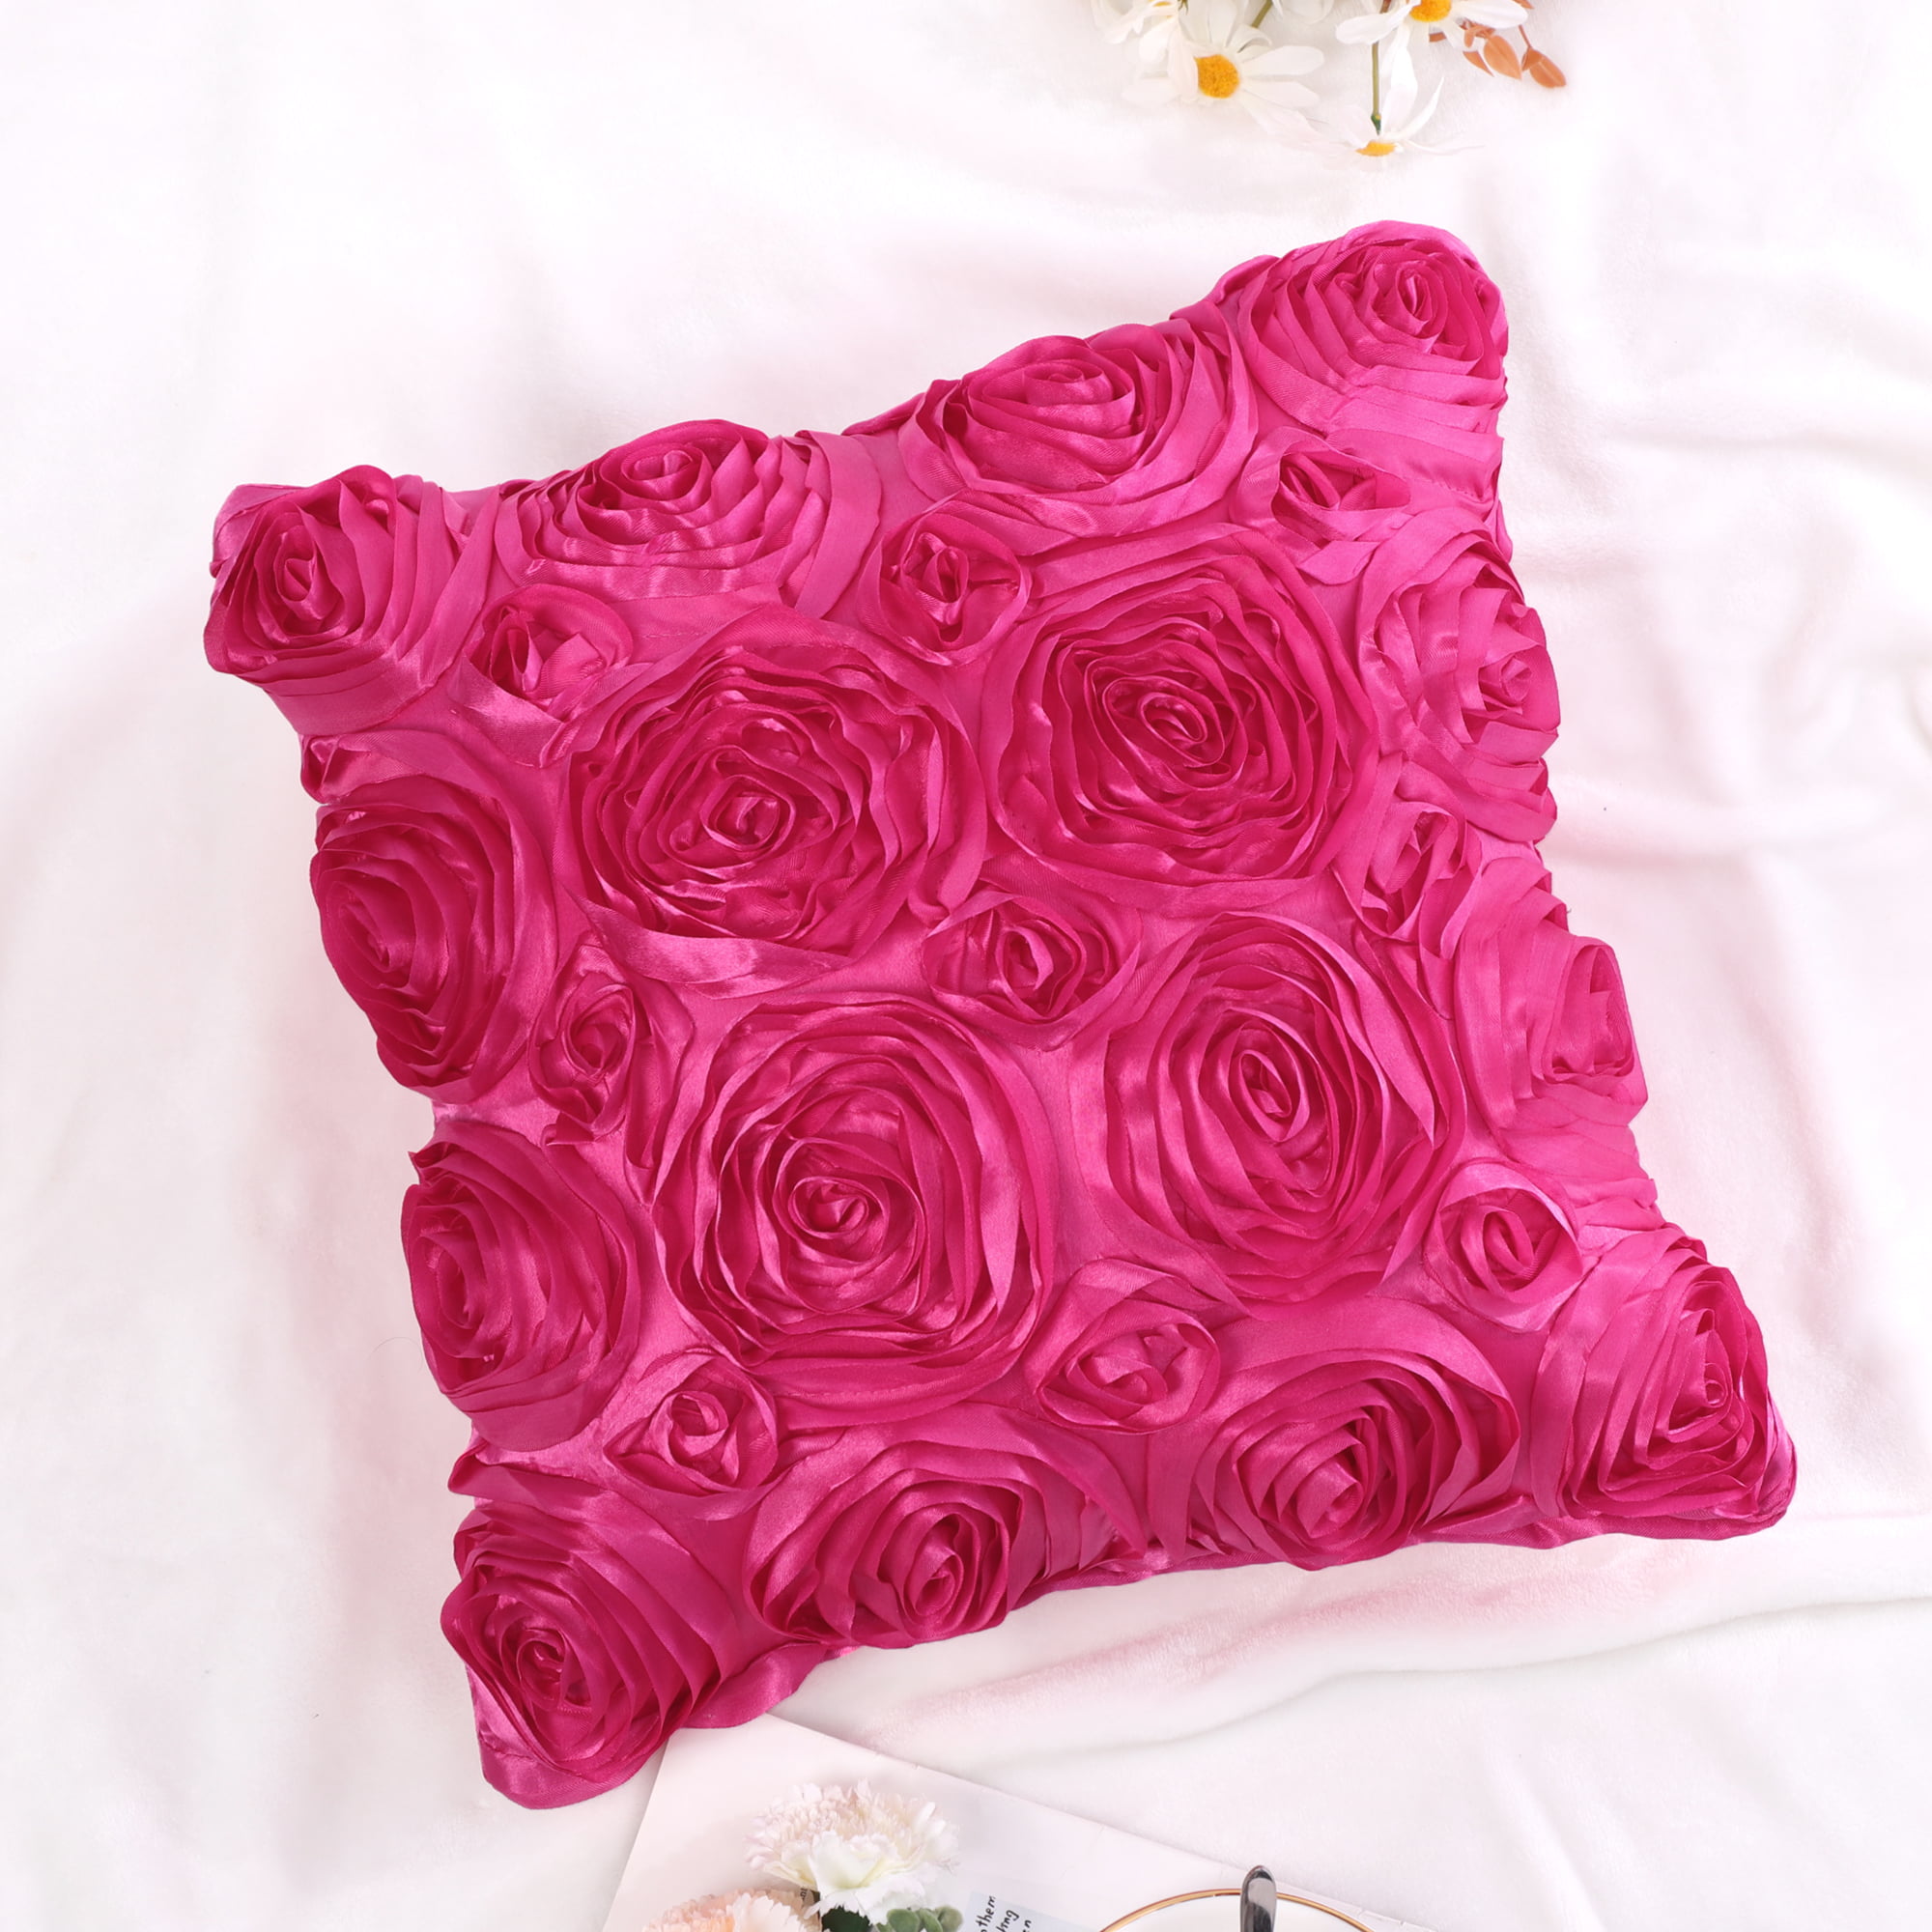 Details about  / Rose Printed 24/" Cushion Cover Home Sofa Car Waist through Square Pillow Case